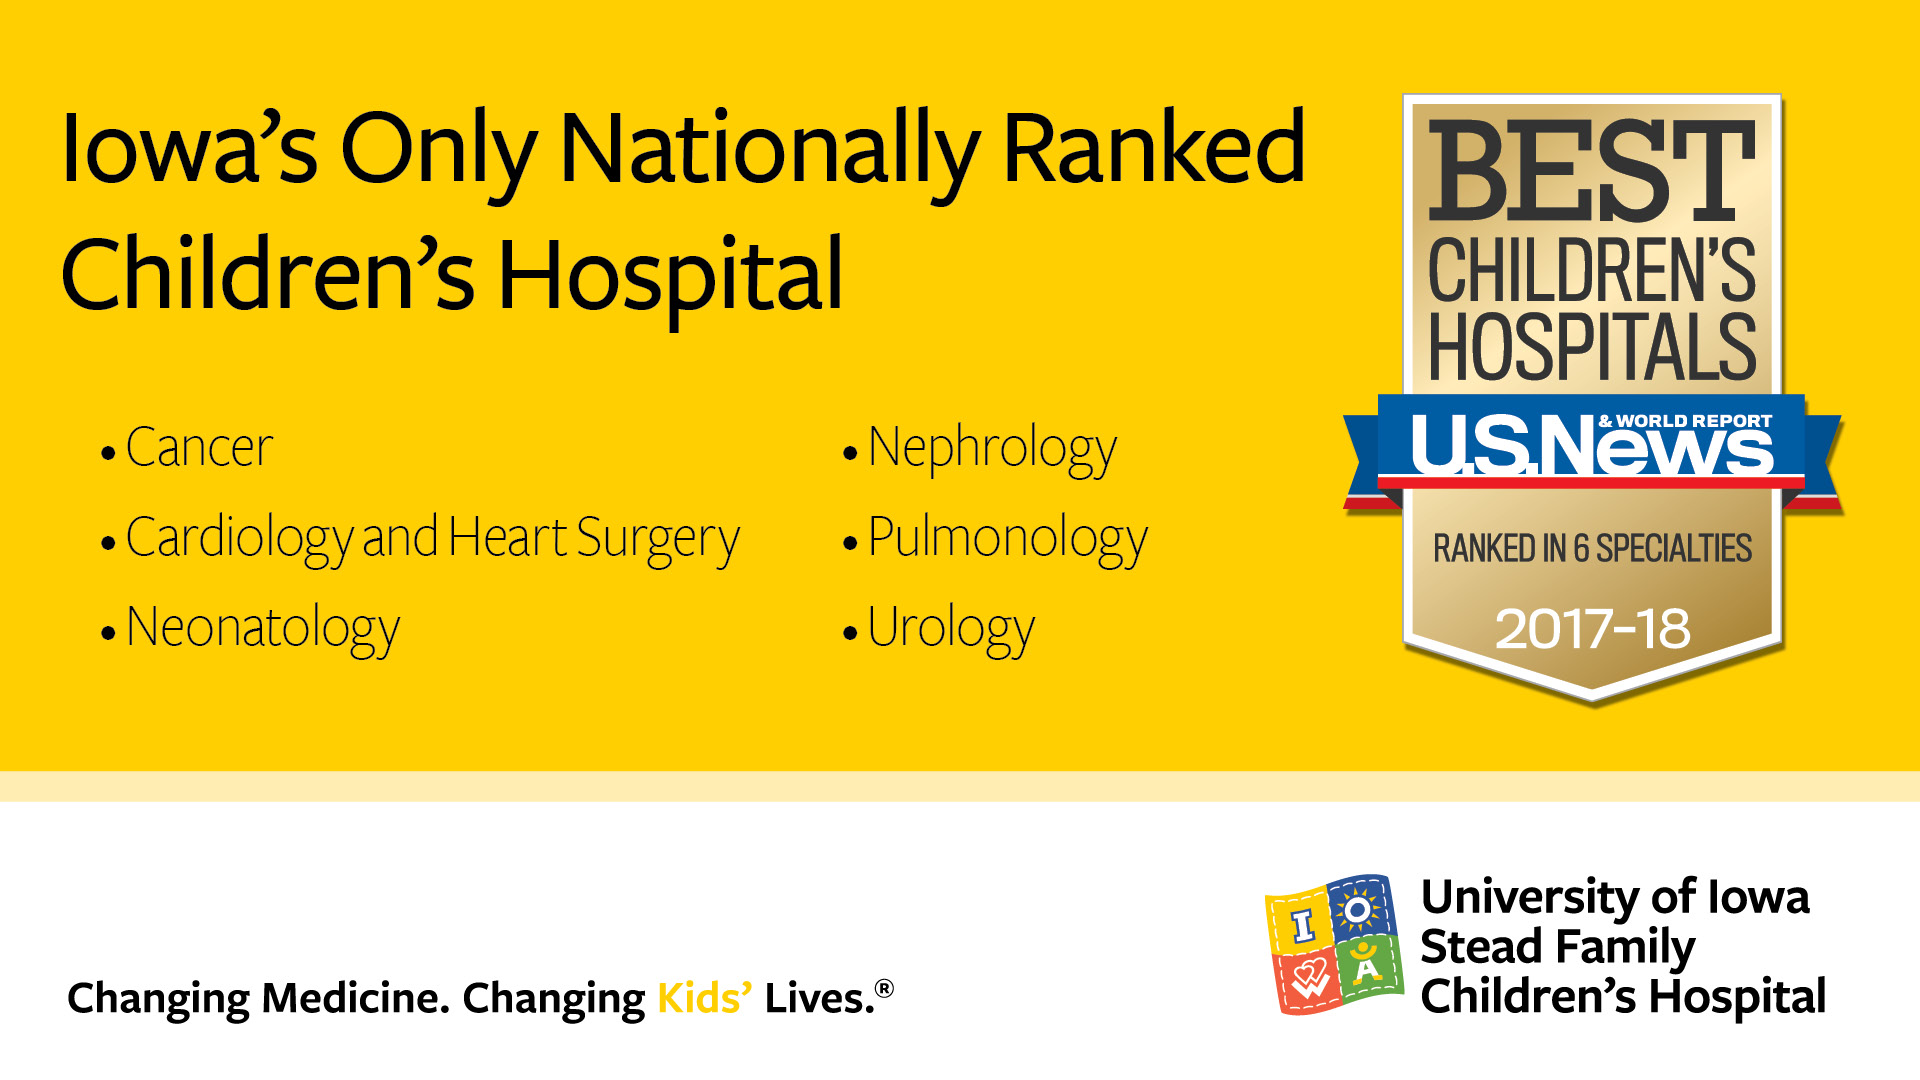 U.S. News Best Children's Hospital - Iowa's Only Nationally Ranked Children's Hospital